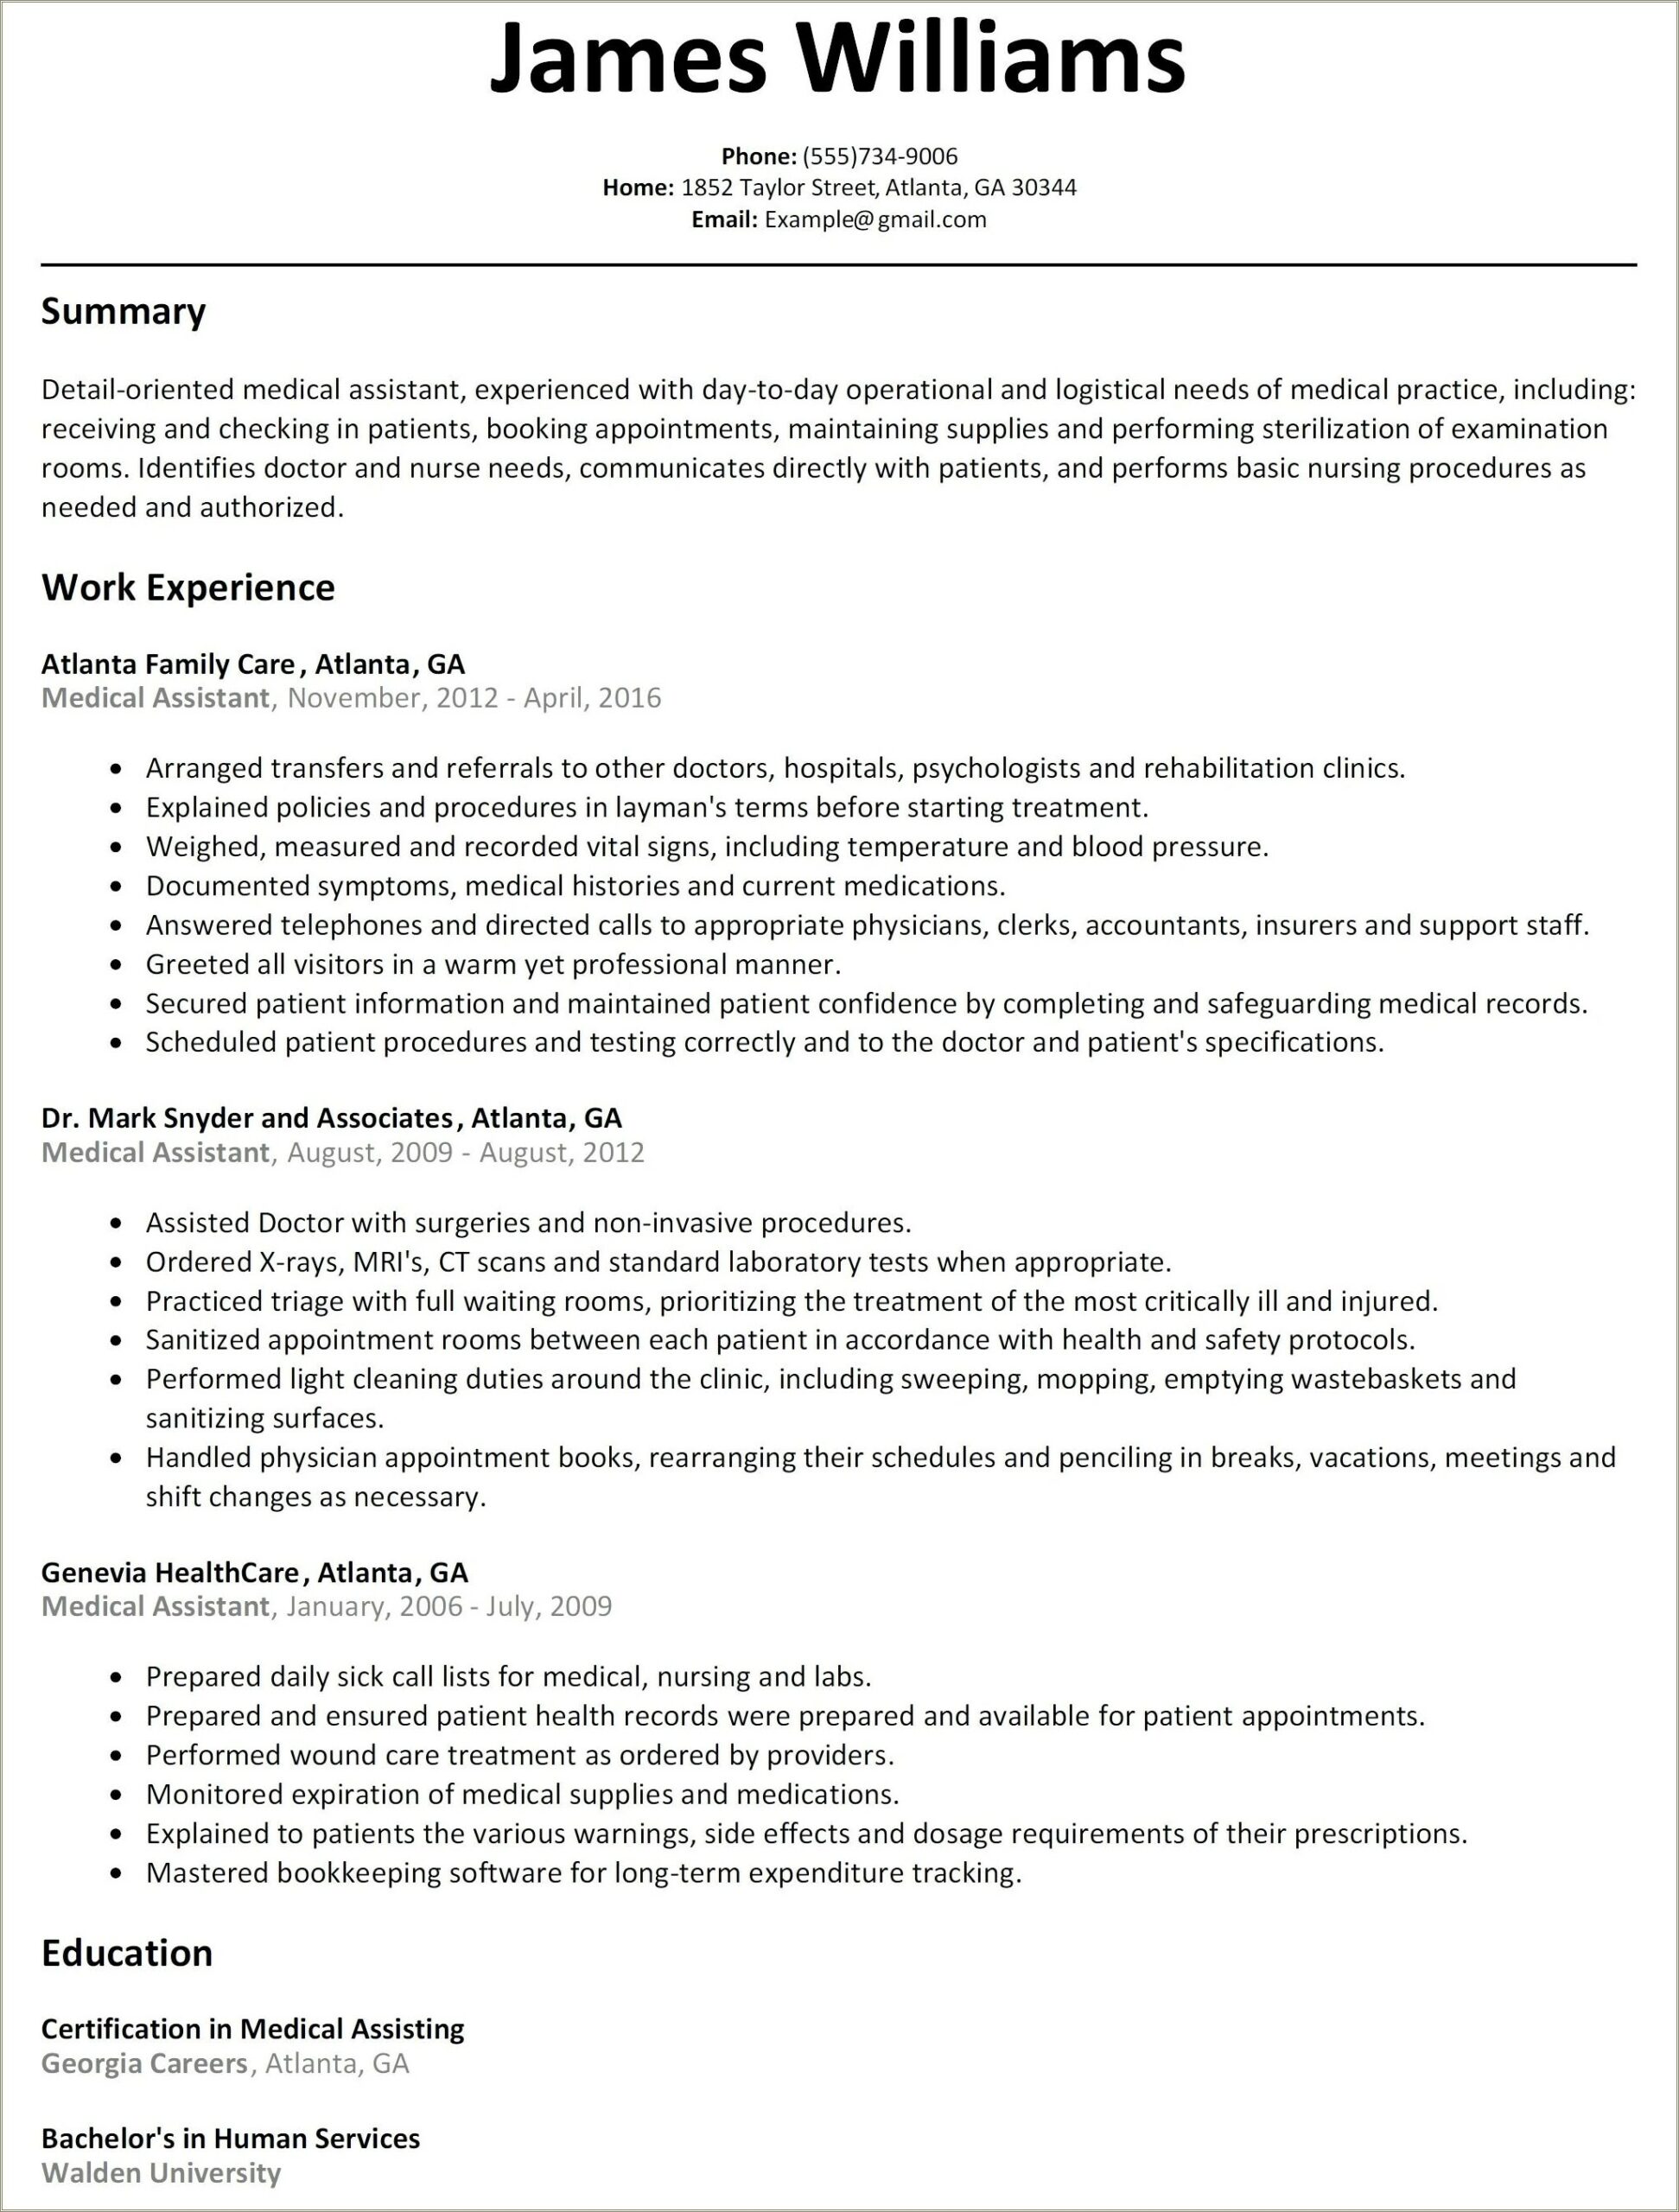 Description Of Nursing Assistant For Resume